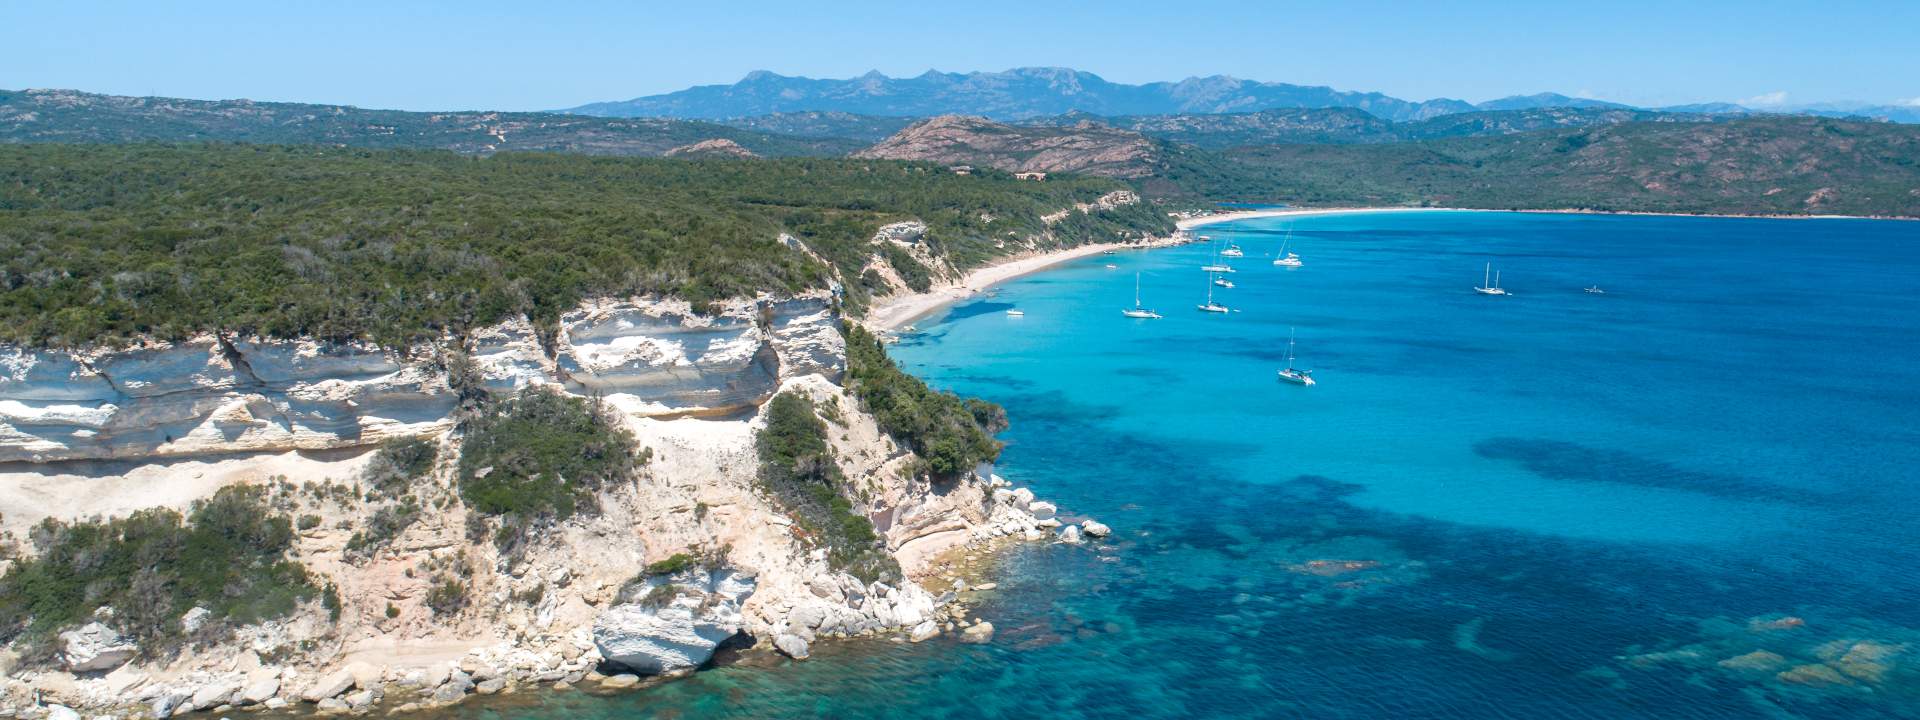 Explore the most beautiful coast of Sardinia: Costa Smeralda